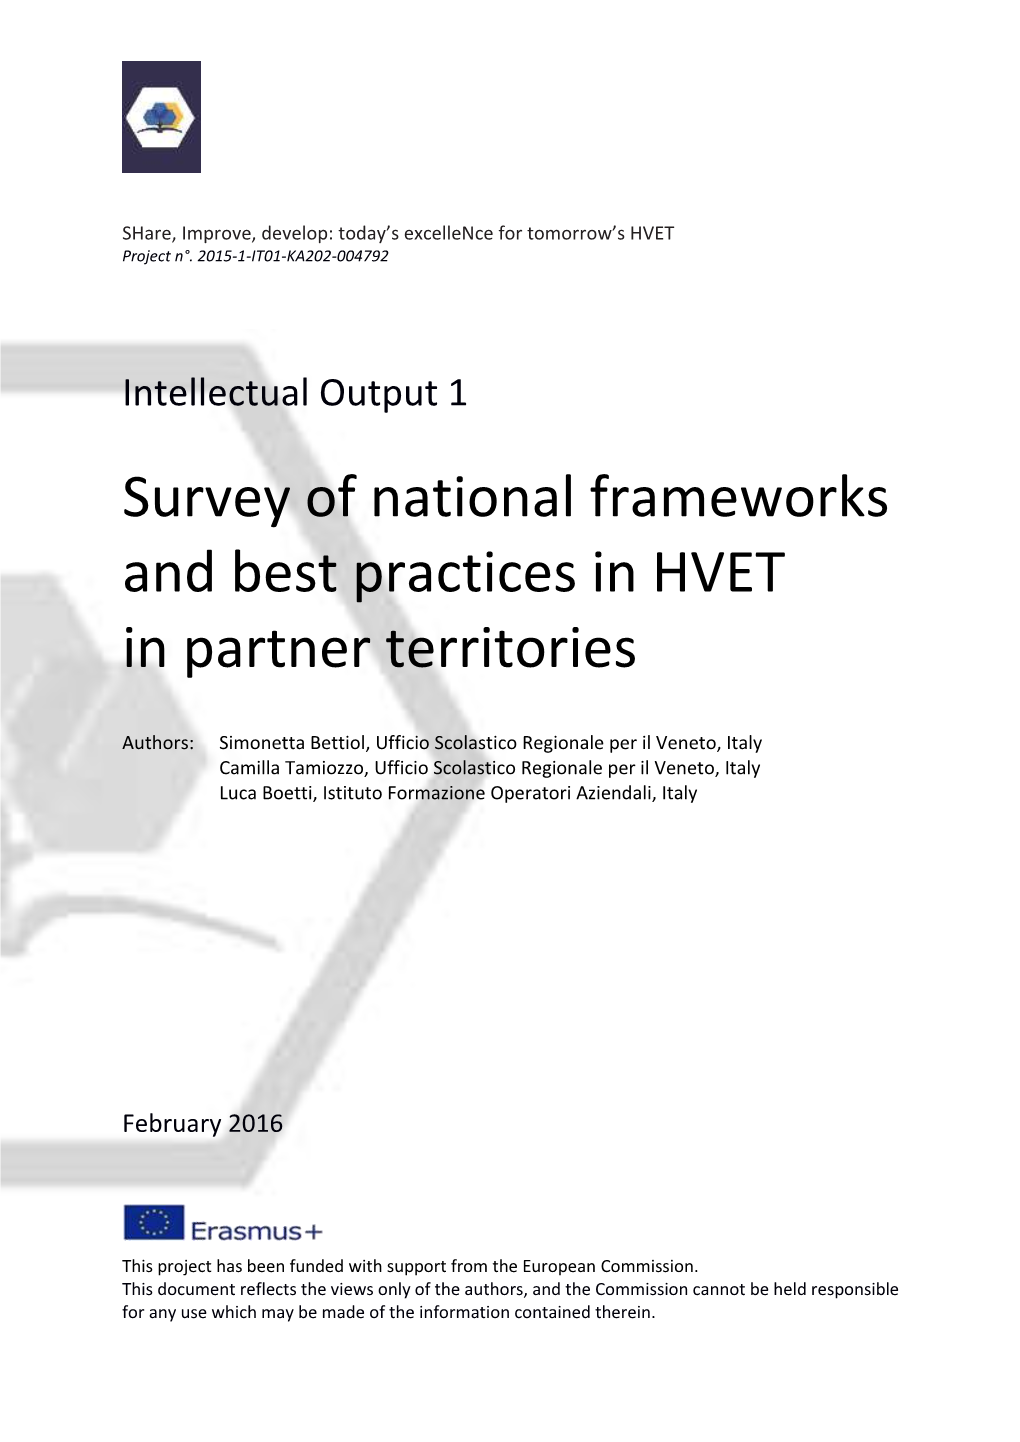 Survey of National Frameworks and Best Practices in HVET in Partner Territories